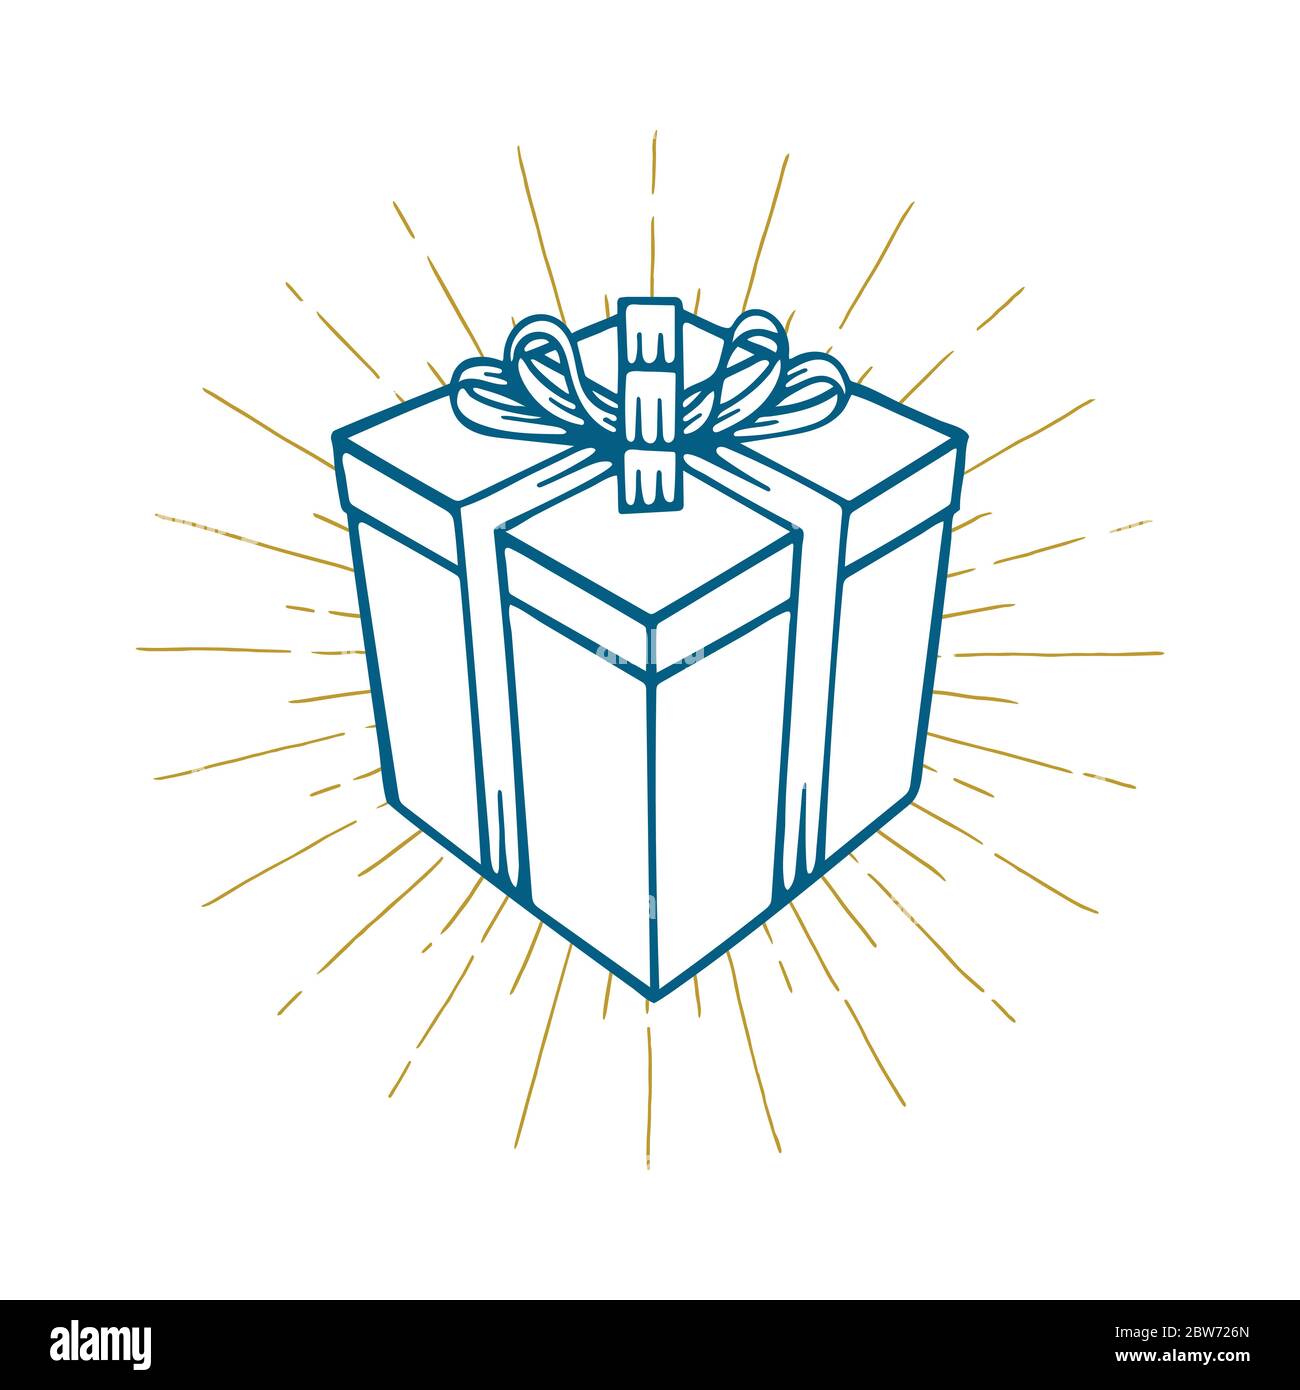 https://c8.alamy.com/comp/2BW726N/gift-box-hand-drawn-vector-gift-box-with-light-rays-gift-box-with-shine-sketch-drawing-part-of-set-2BW726N.jpg